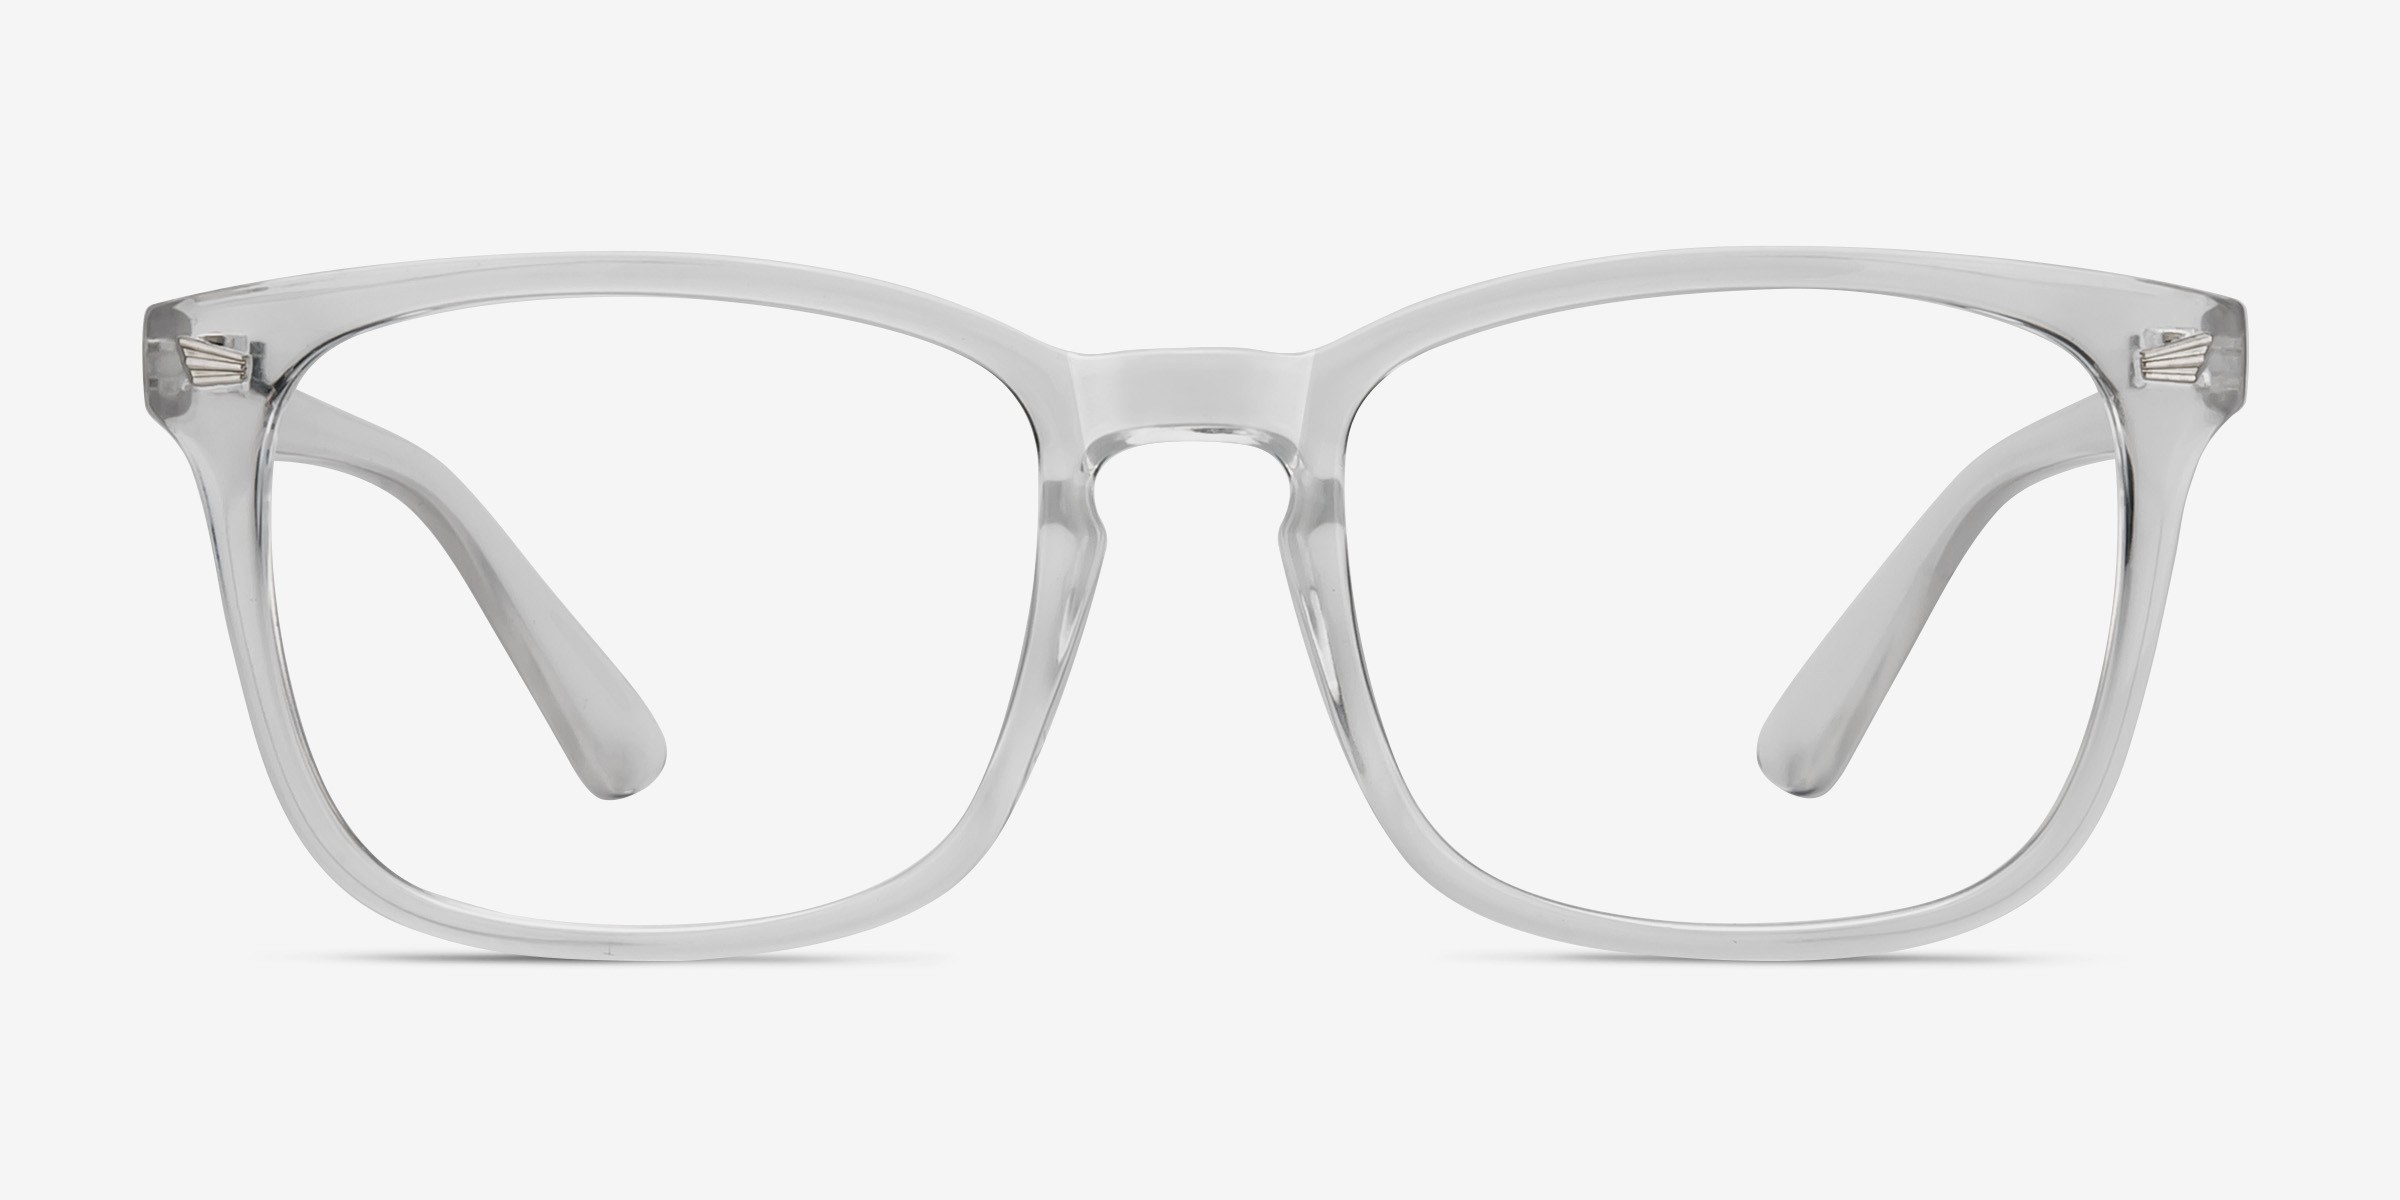 Uptown Square Clear Full Rim Eyeglasses Eyebuydirect